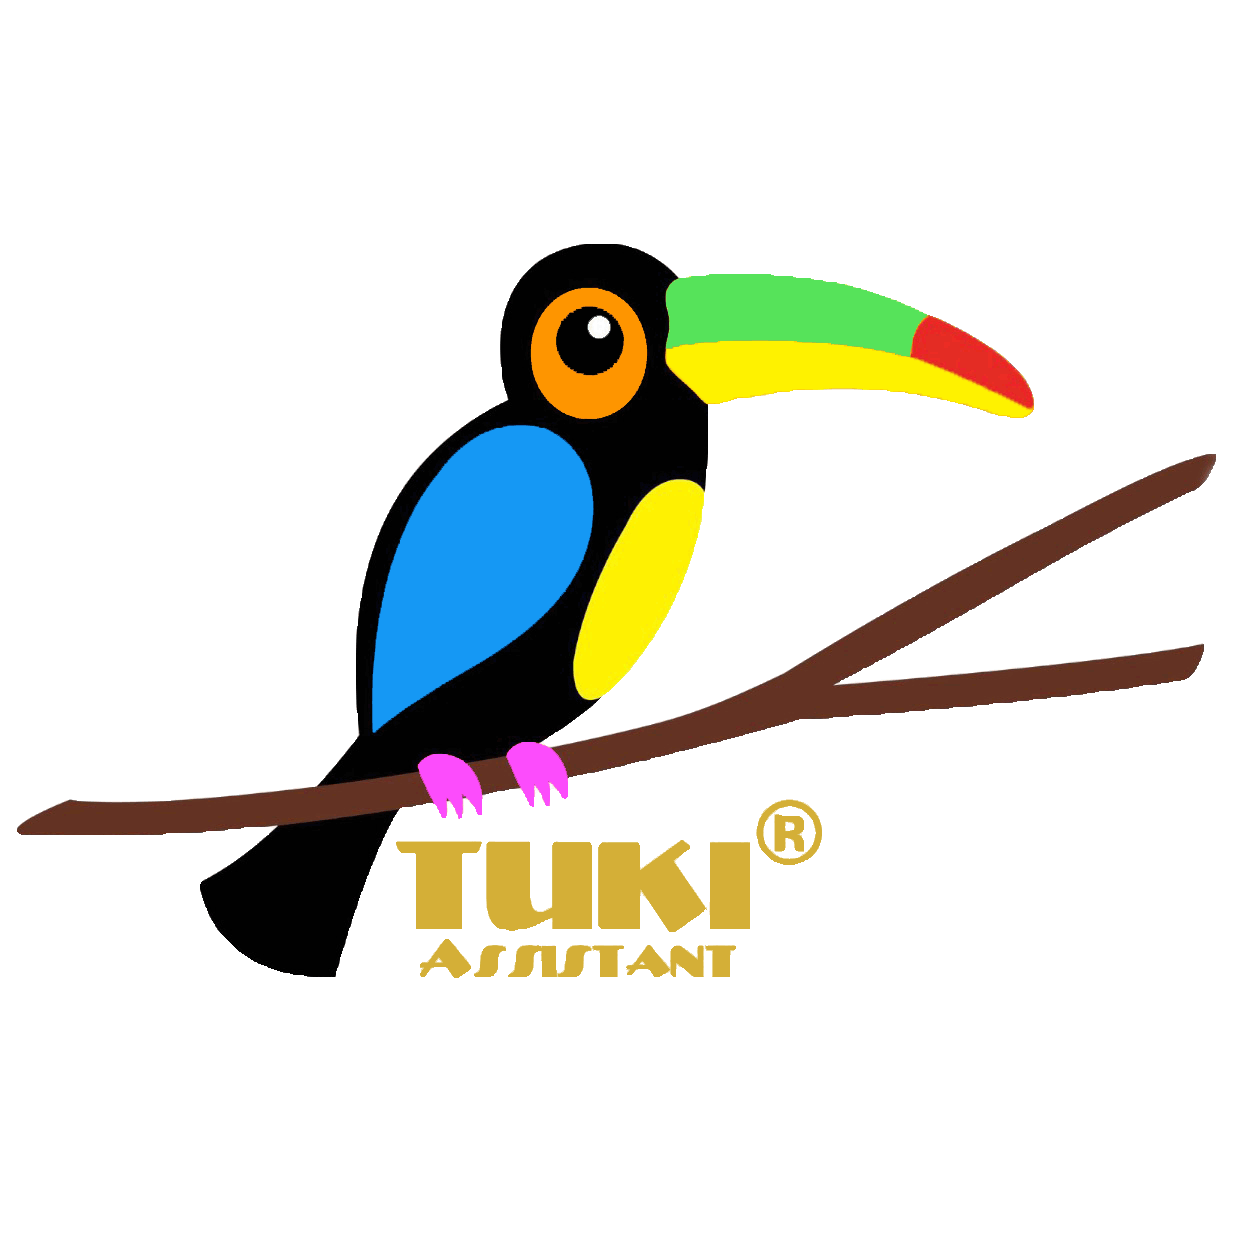 Toucan clipart bird brazil. Tuki s questions al